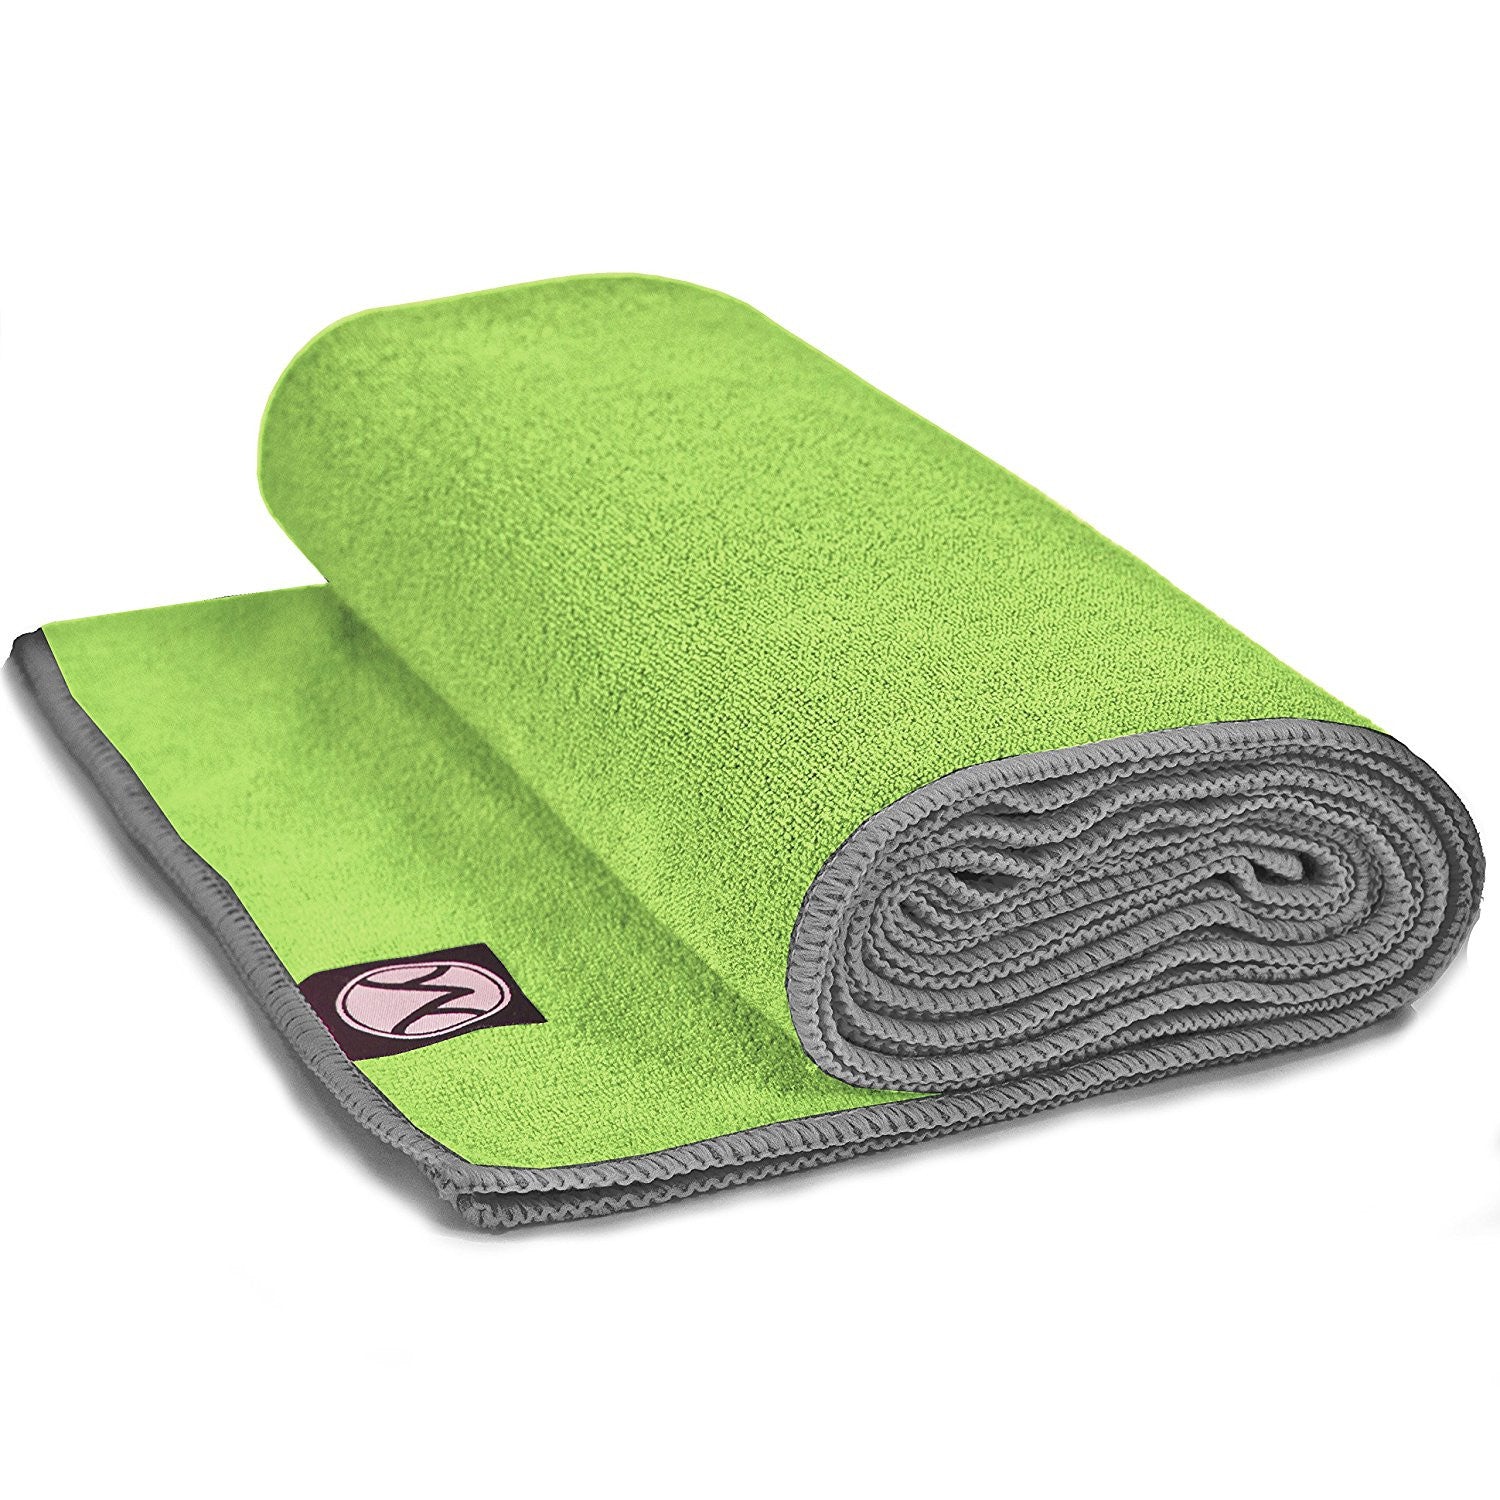  Youphoria 24-Inch-by-72-Inch Microfiber Yoga Towel